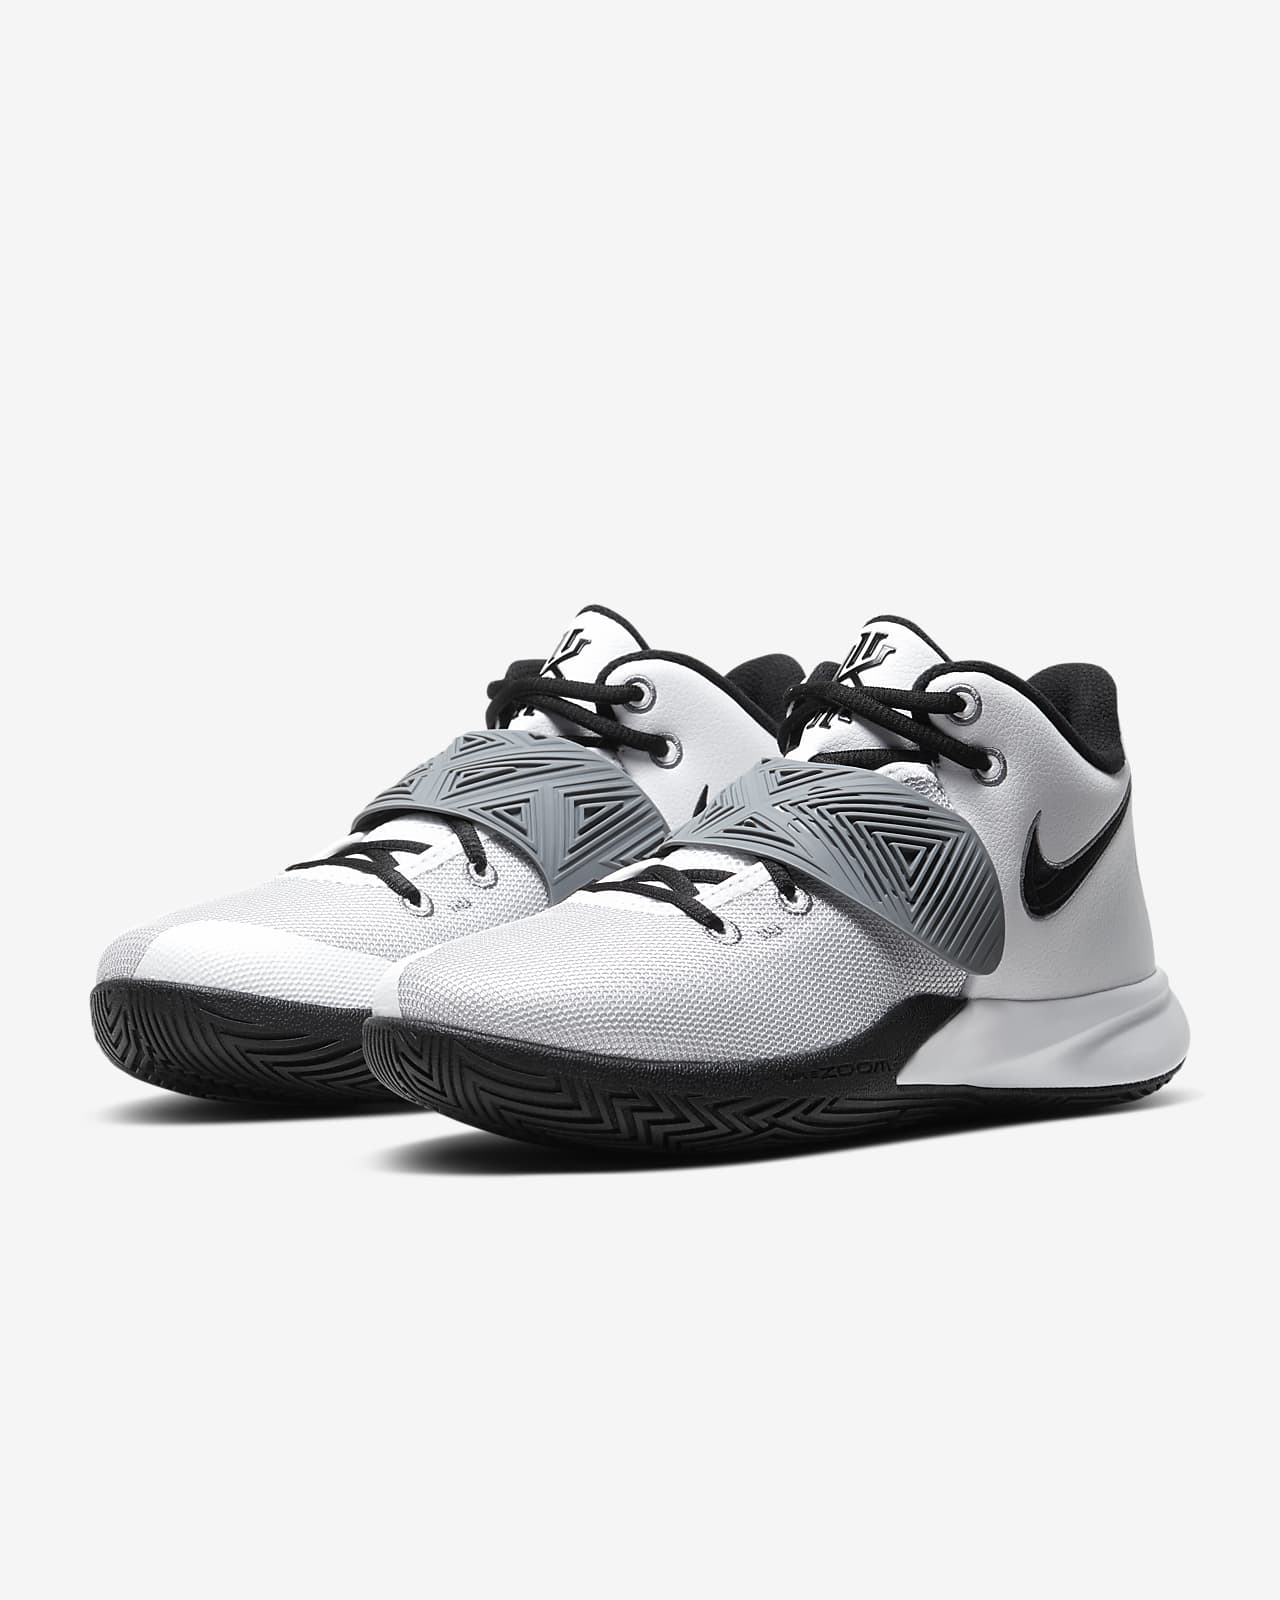 Kyrie Flytrap 3 EP Basketball Shoe. Nike JP